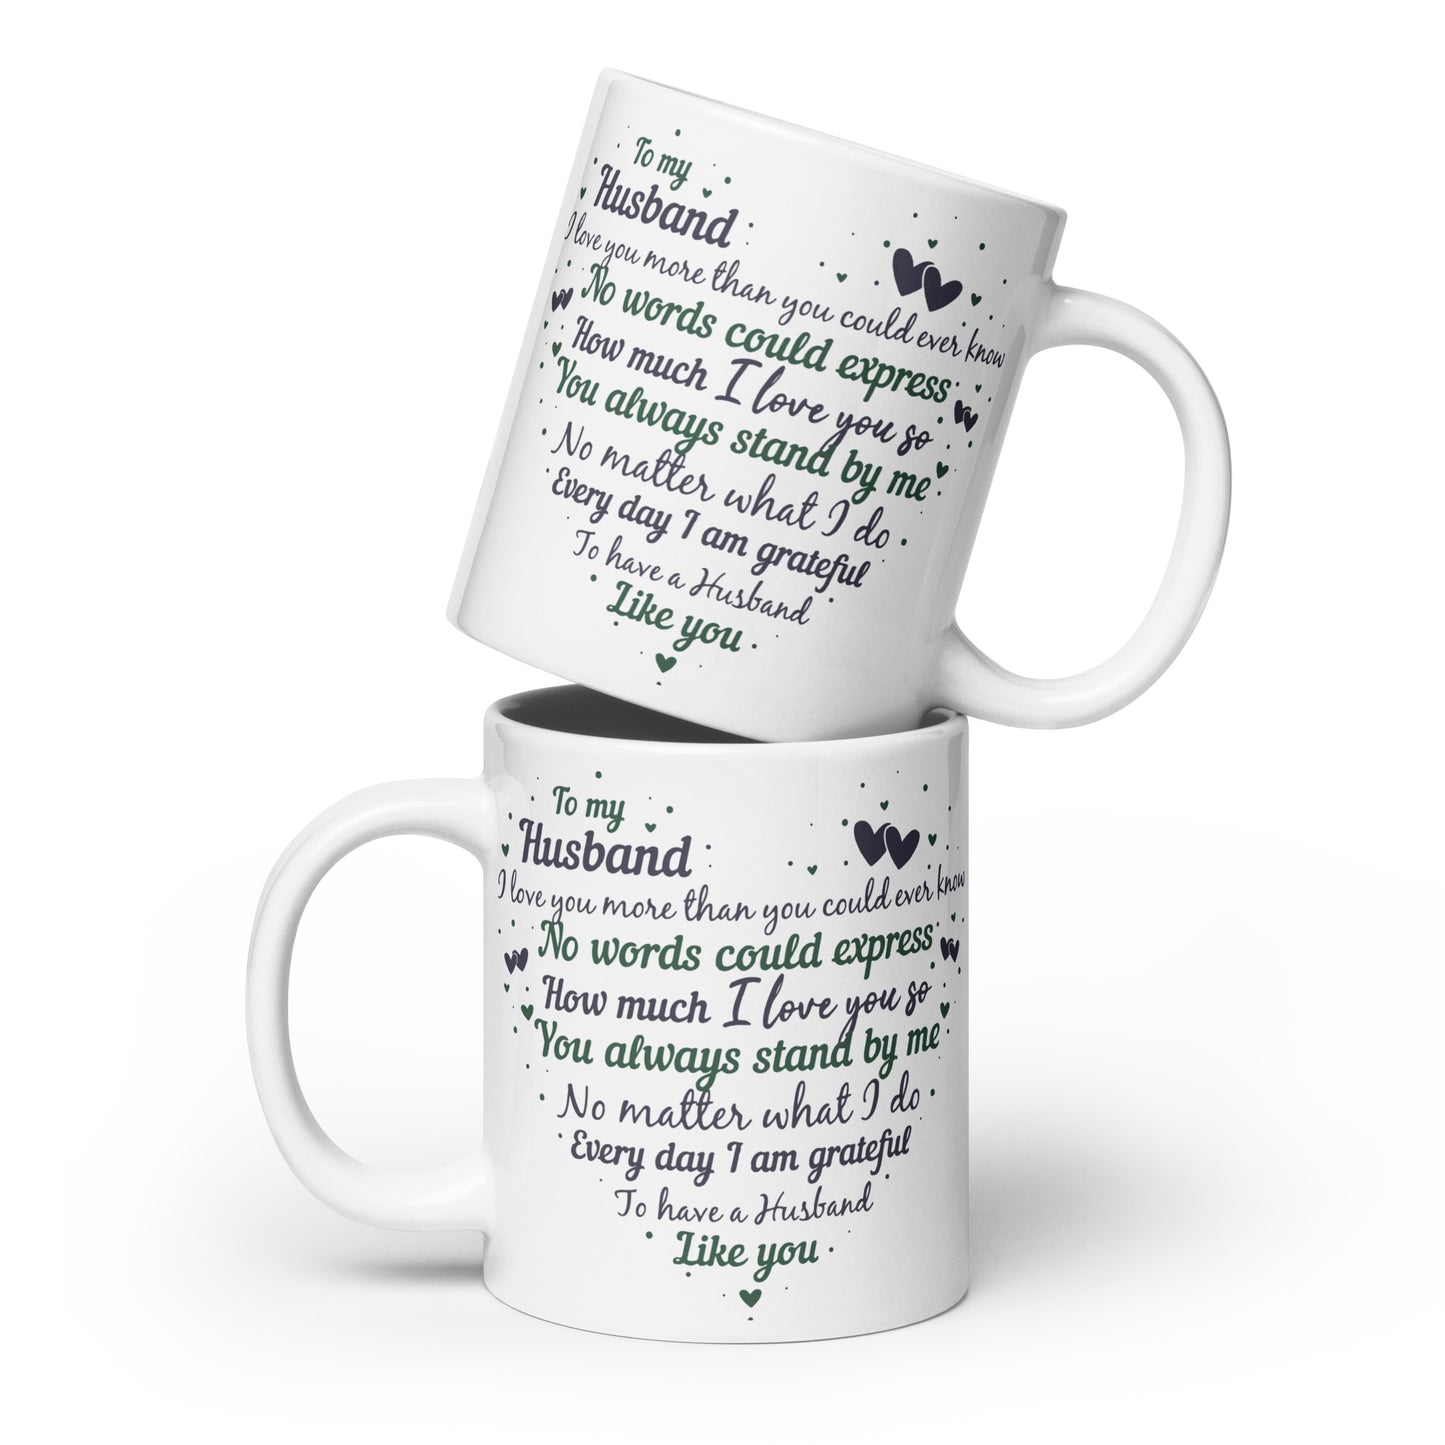 To my Husband I love you_ Personalized Mug Gift Customized Mug Gift w Heartfelt Message